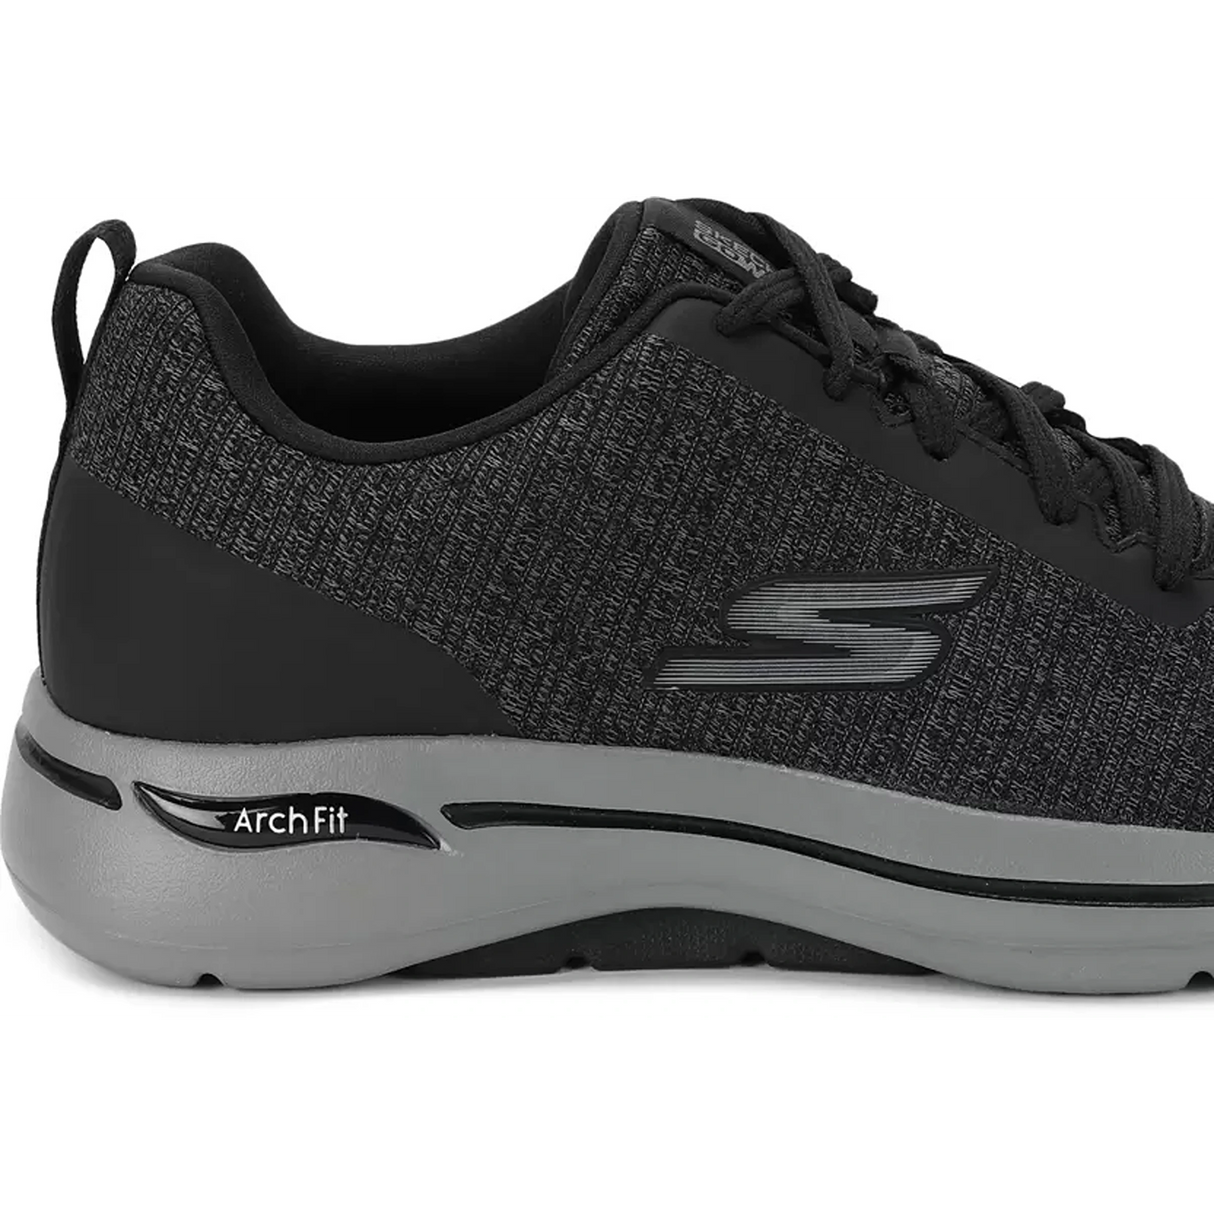 SKECHERS GO WALK ARCH FIT - O Walking Shoes For Men  (Black) (216184-BLK)